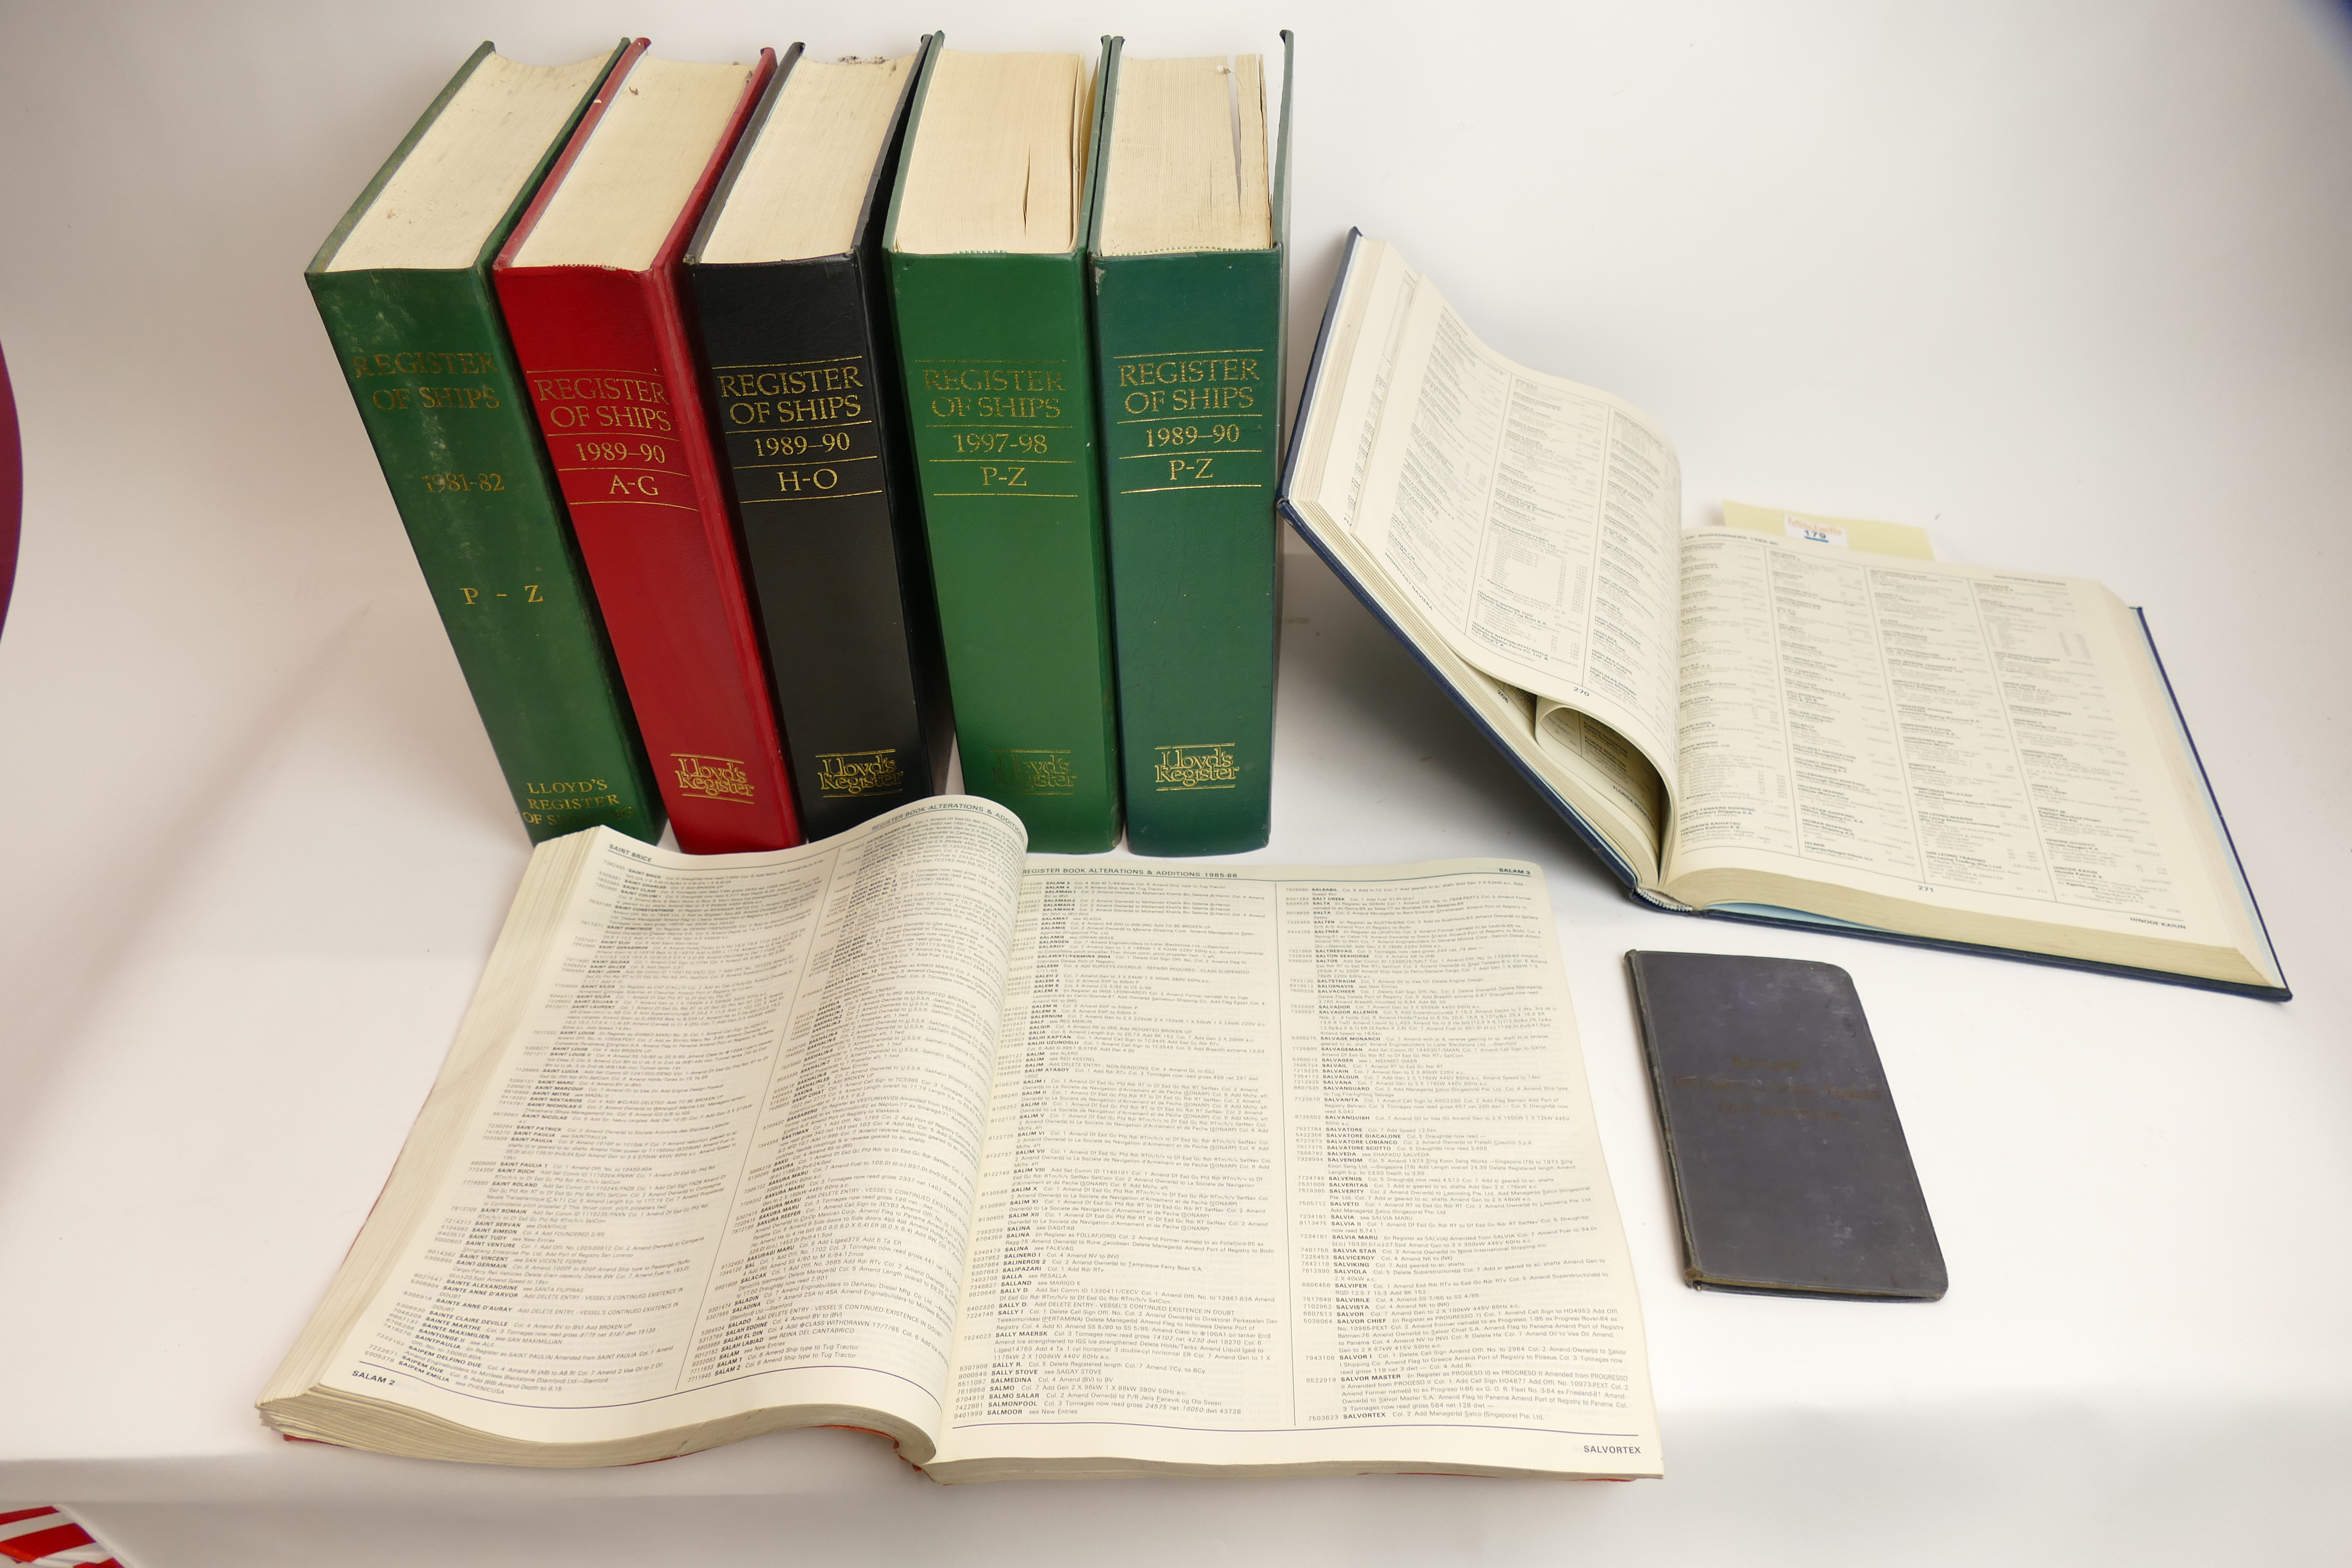 Seven volumes of Register of Ships inclu